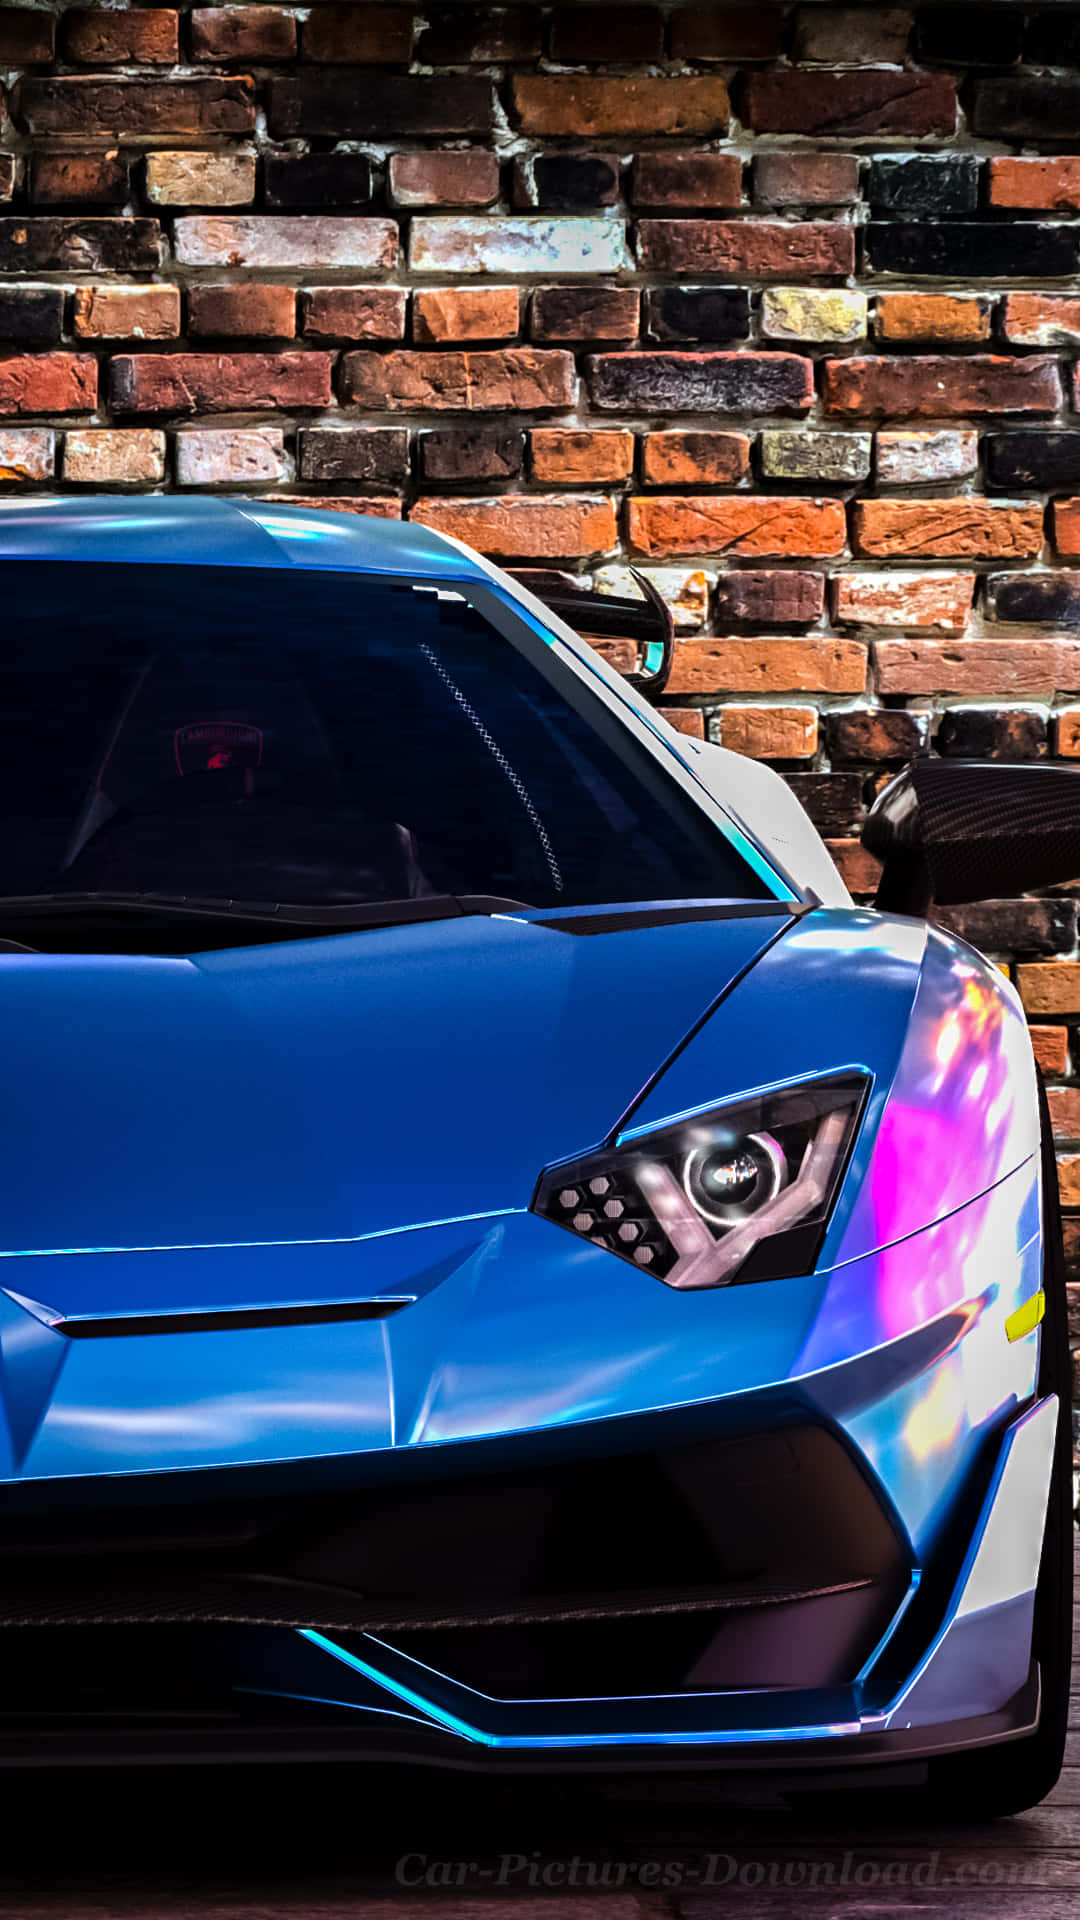 Consigueel Look - Déjate Seducir Por El Lujoso Lamborghini Azul Fondo de pantalla